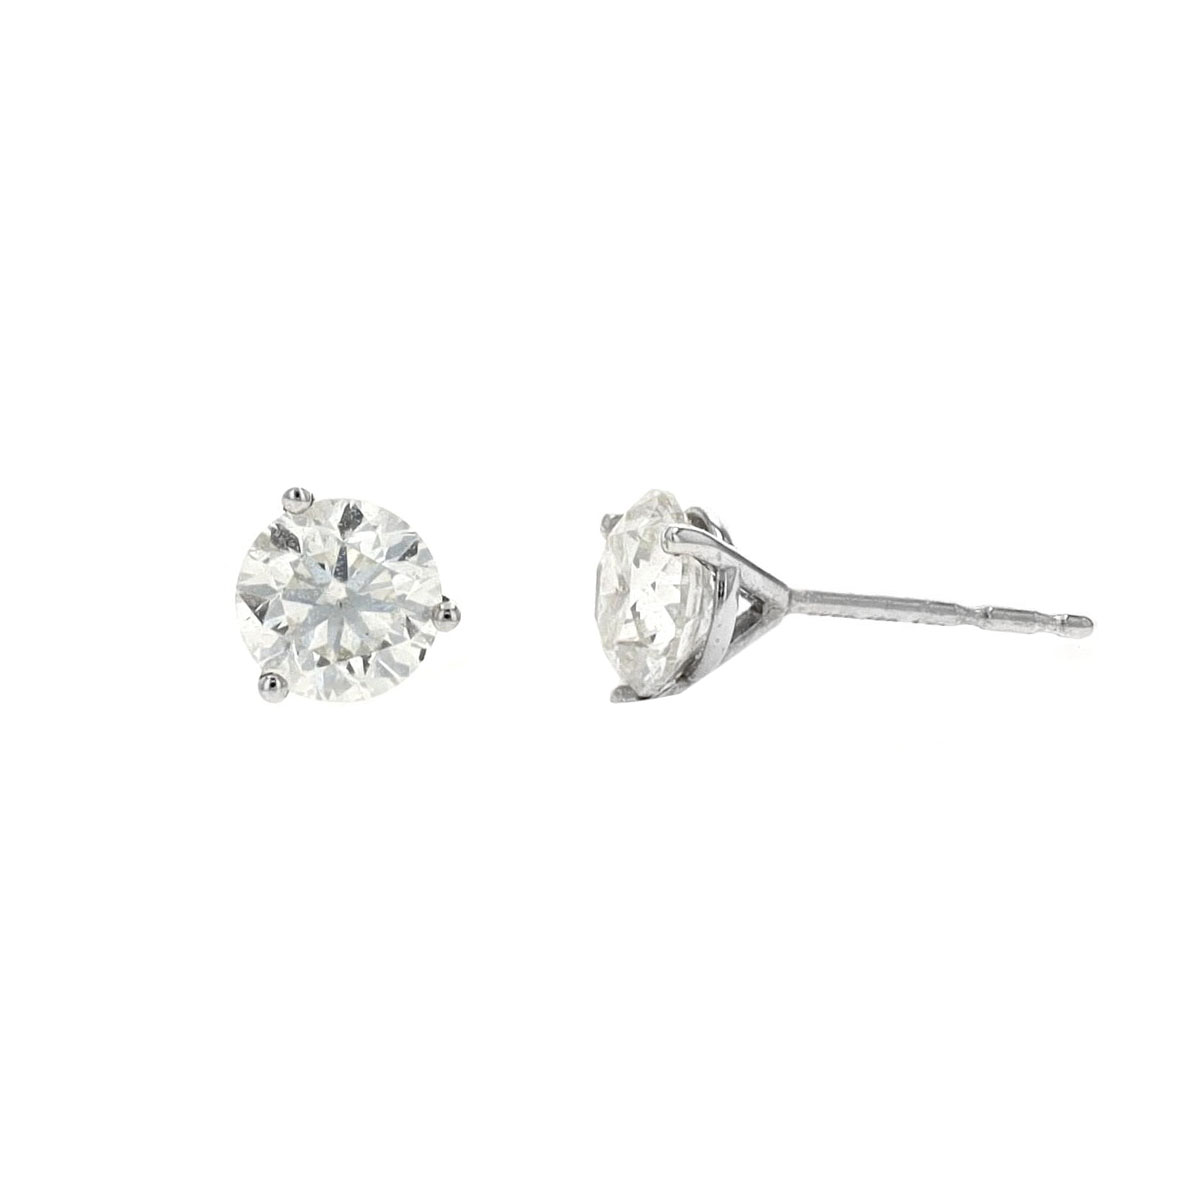 14K White Gold 1.61 Carat Round Diamond Stud Earrings